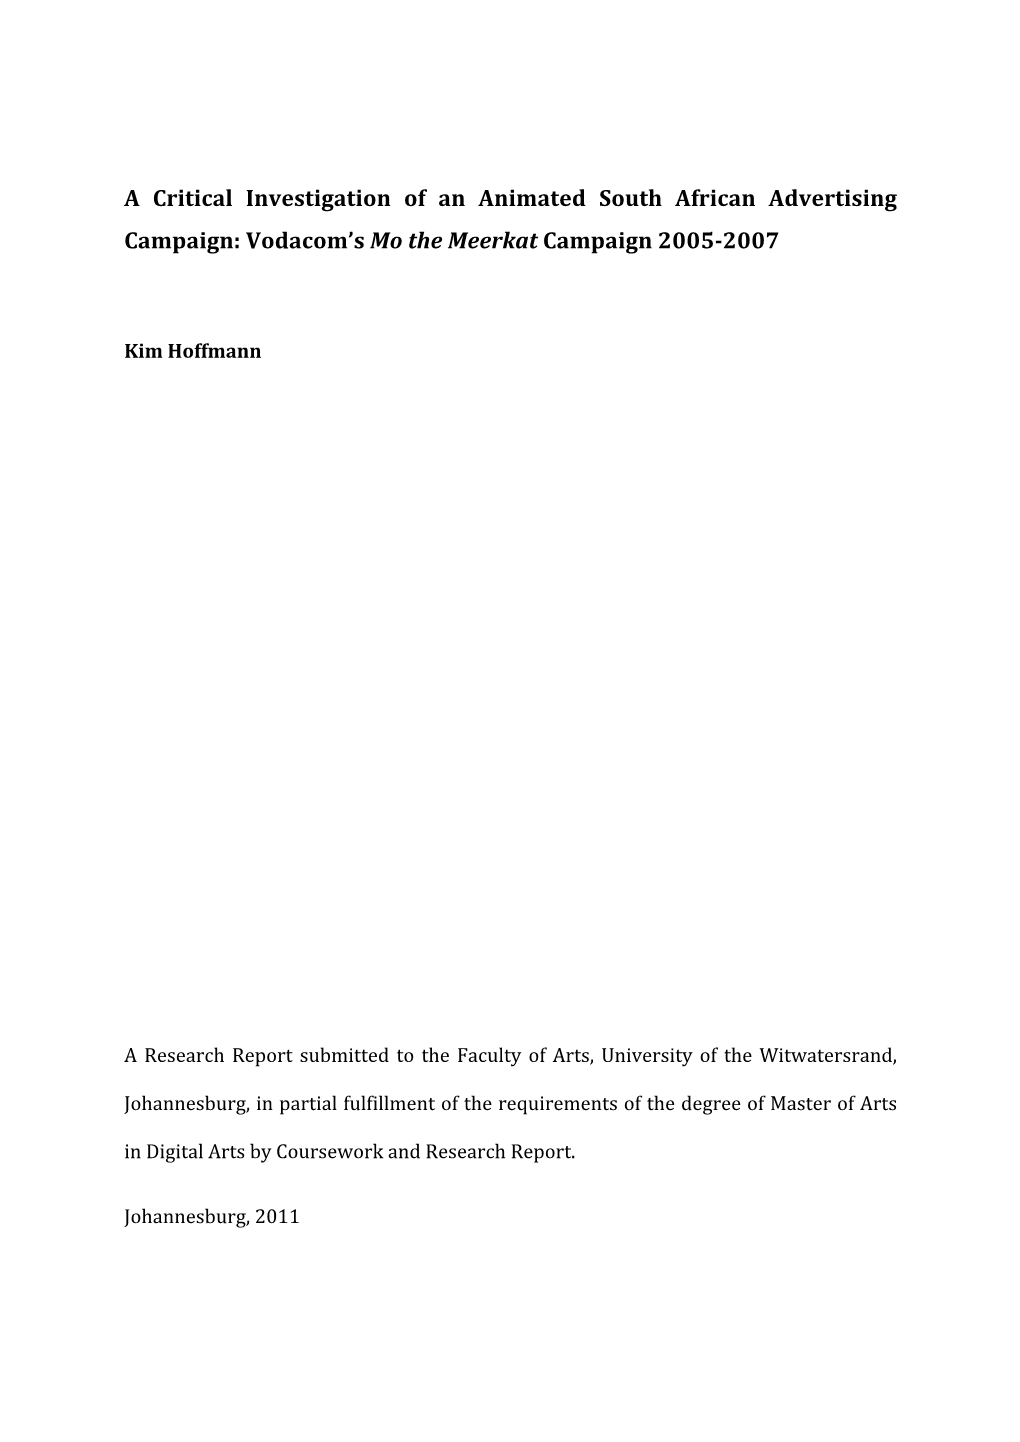 Vodacom's Mo the Meerkat Campaign 2005-200